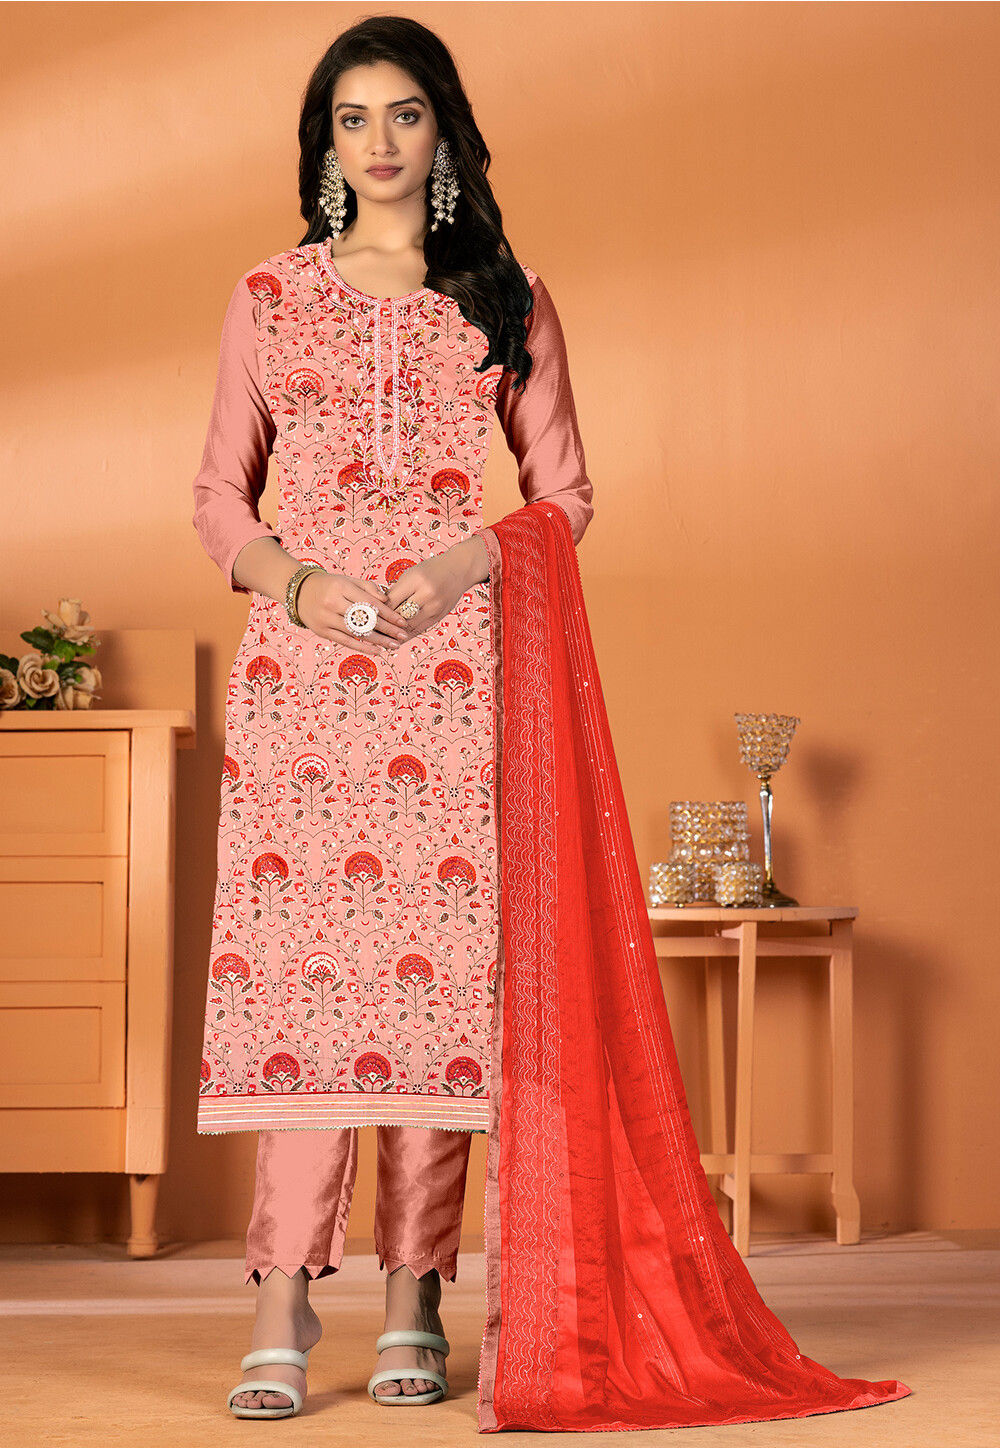 Banarsi Style Cotton Jacquard Suit with Cotton Jacquard Dupatta Price in  Pakistan (M014644) - 2023 Designs, Reviews & Videos